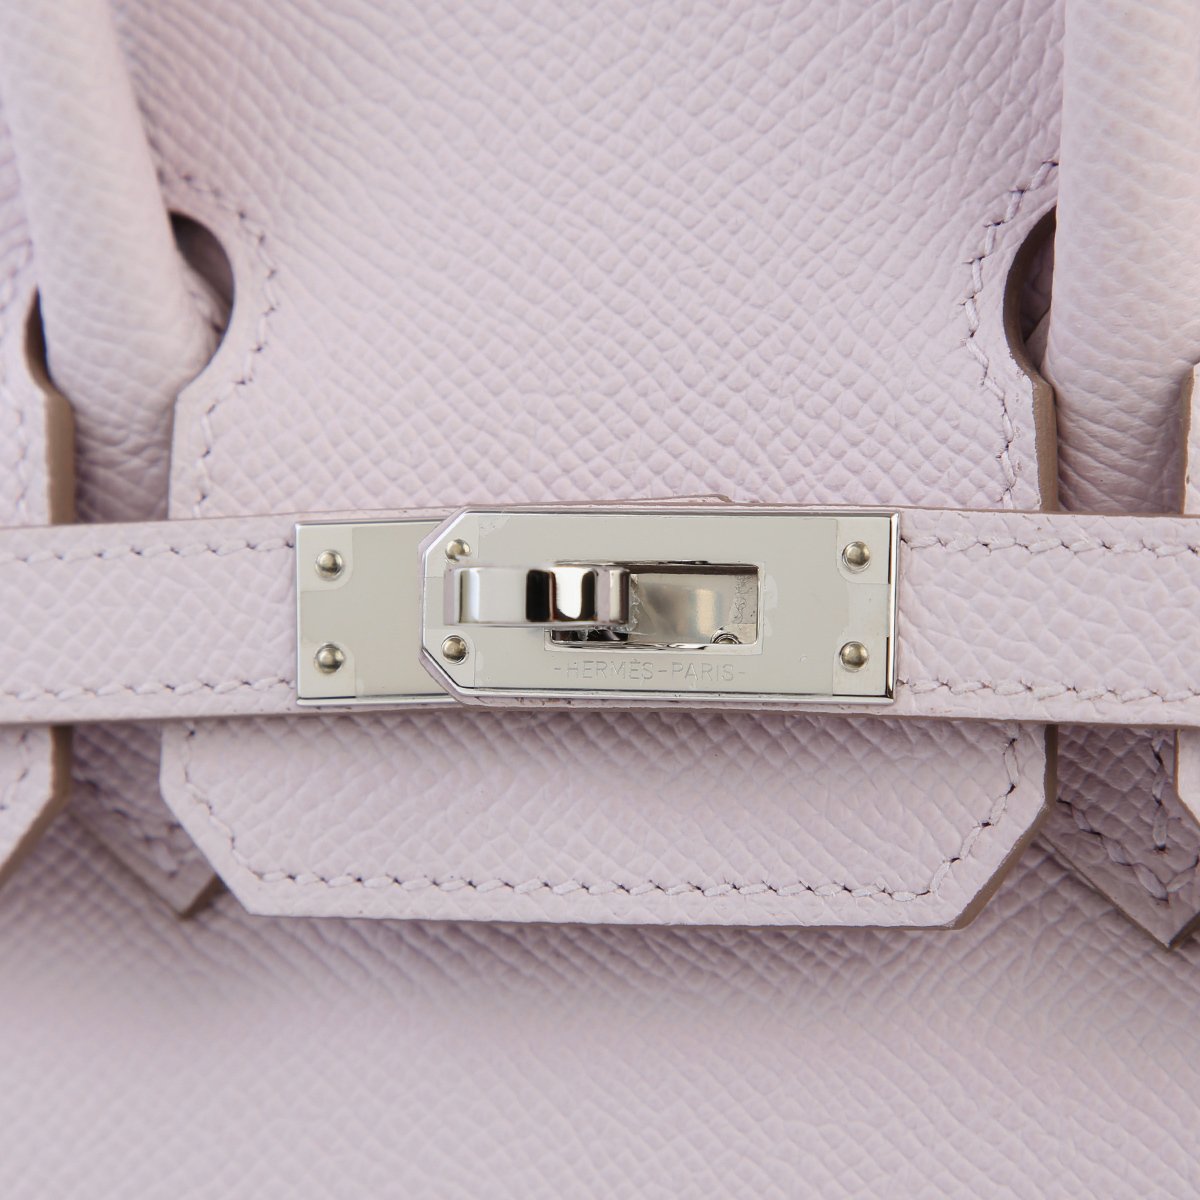 Hermès 25cm Birkin Sellier Mauve Pale Palladium Hardware – Privé Porter